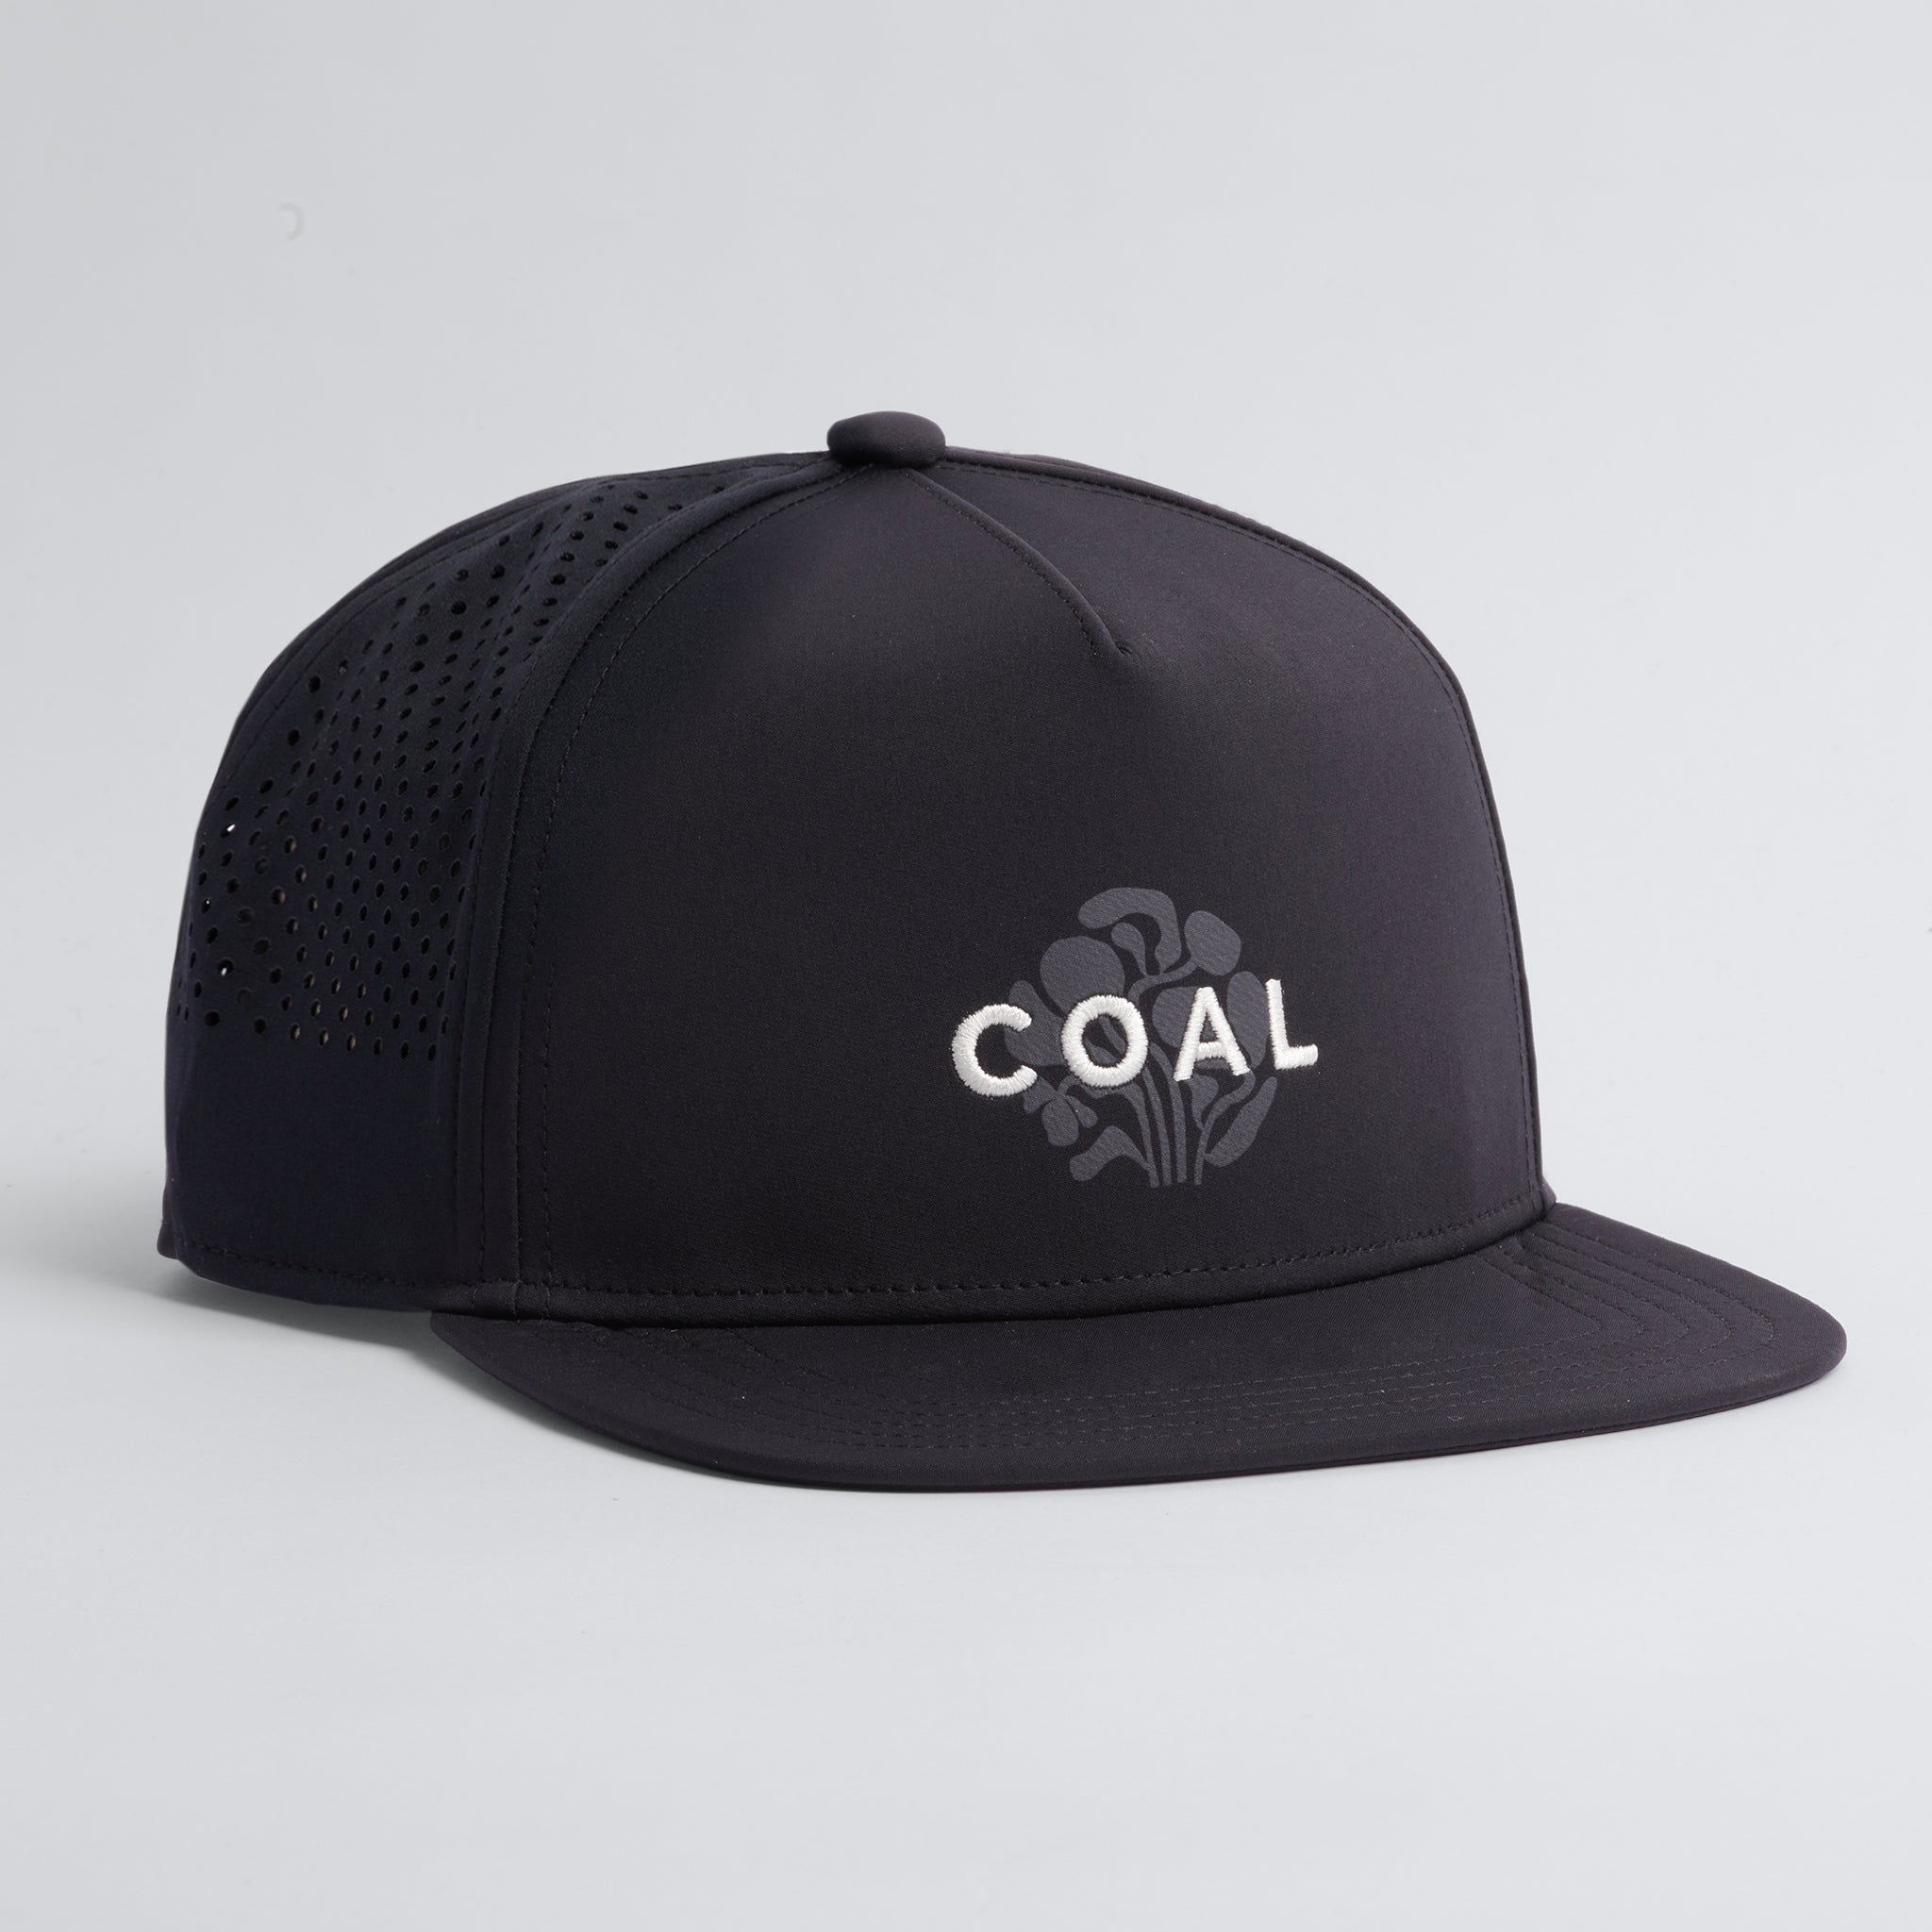 Caps & Hats  Baseball, Dad Hats, Truckers & More at Coal Headwear